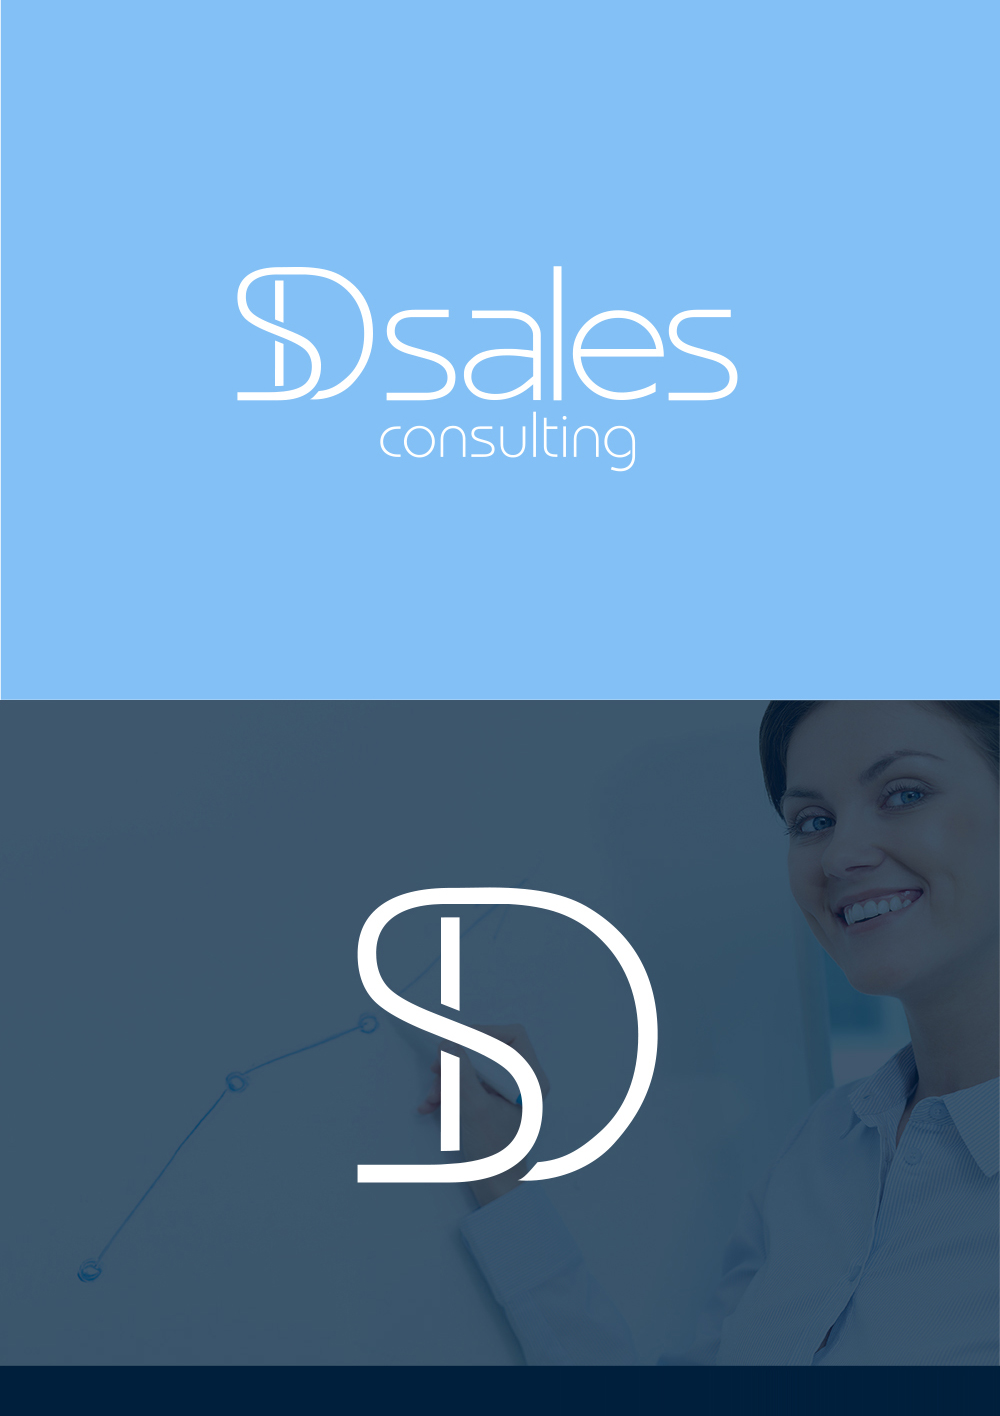 criacao-de-logotipo-SD-Sales-identidade-visual-1